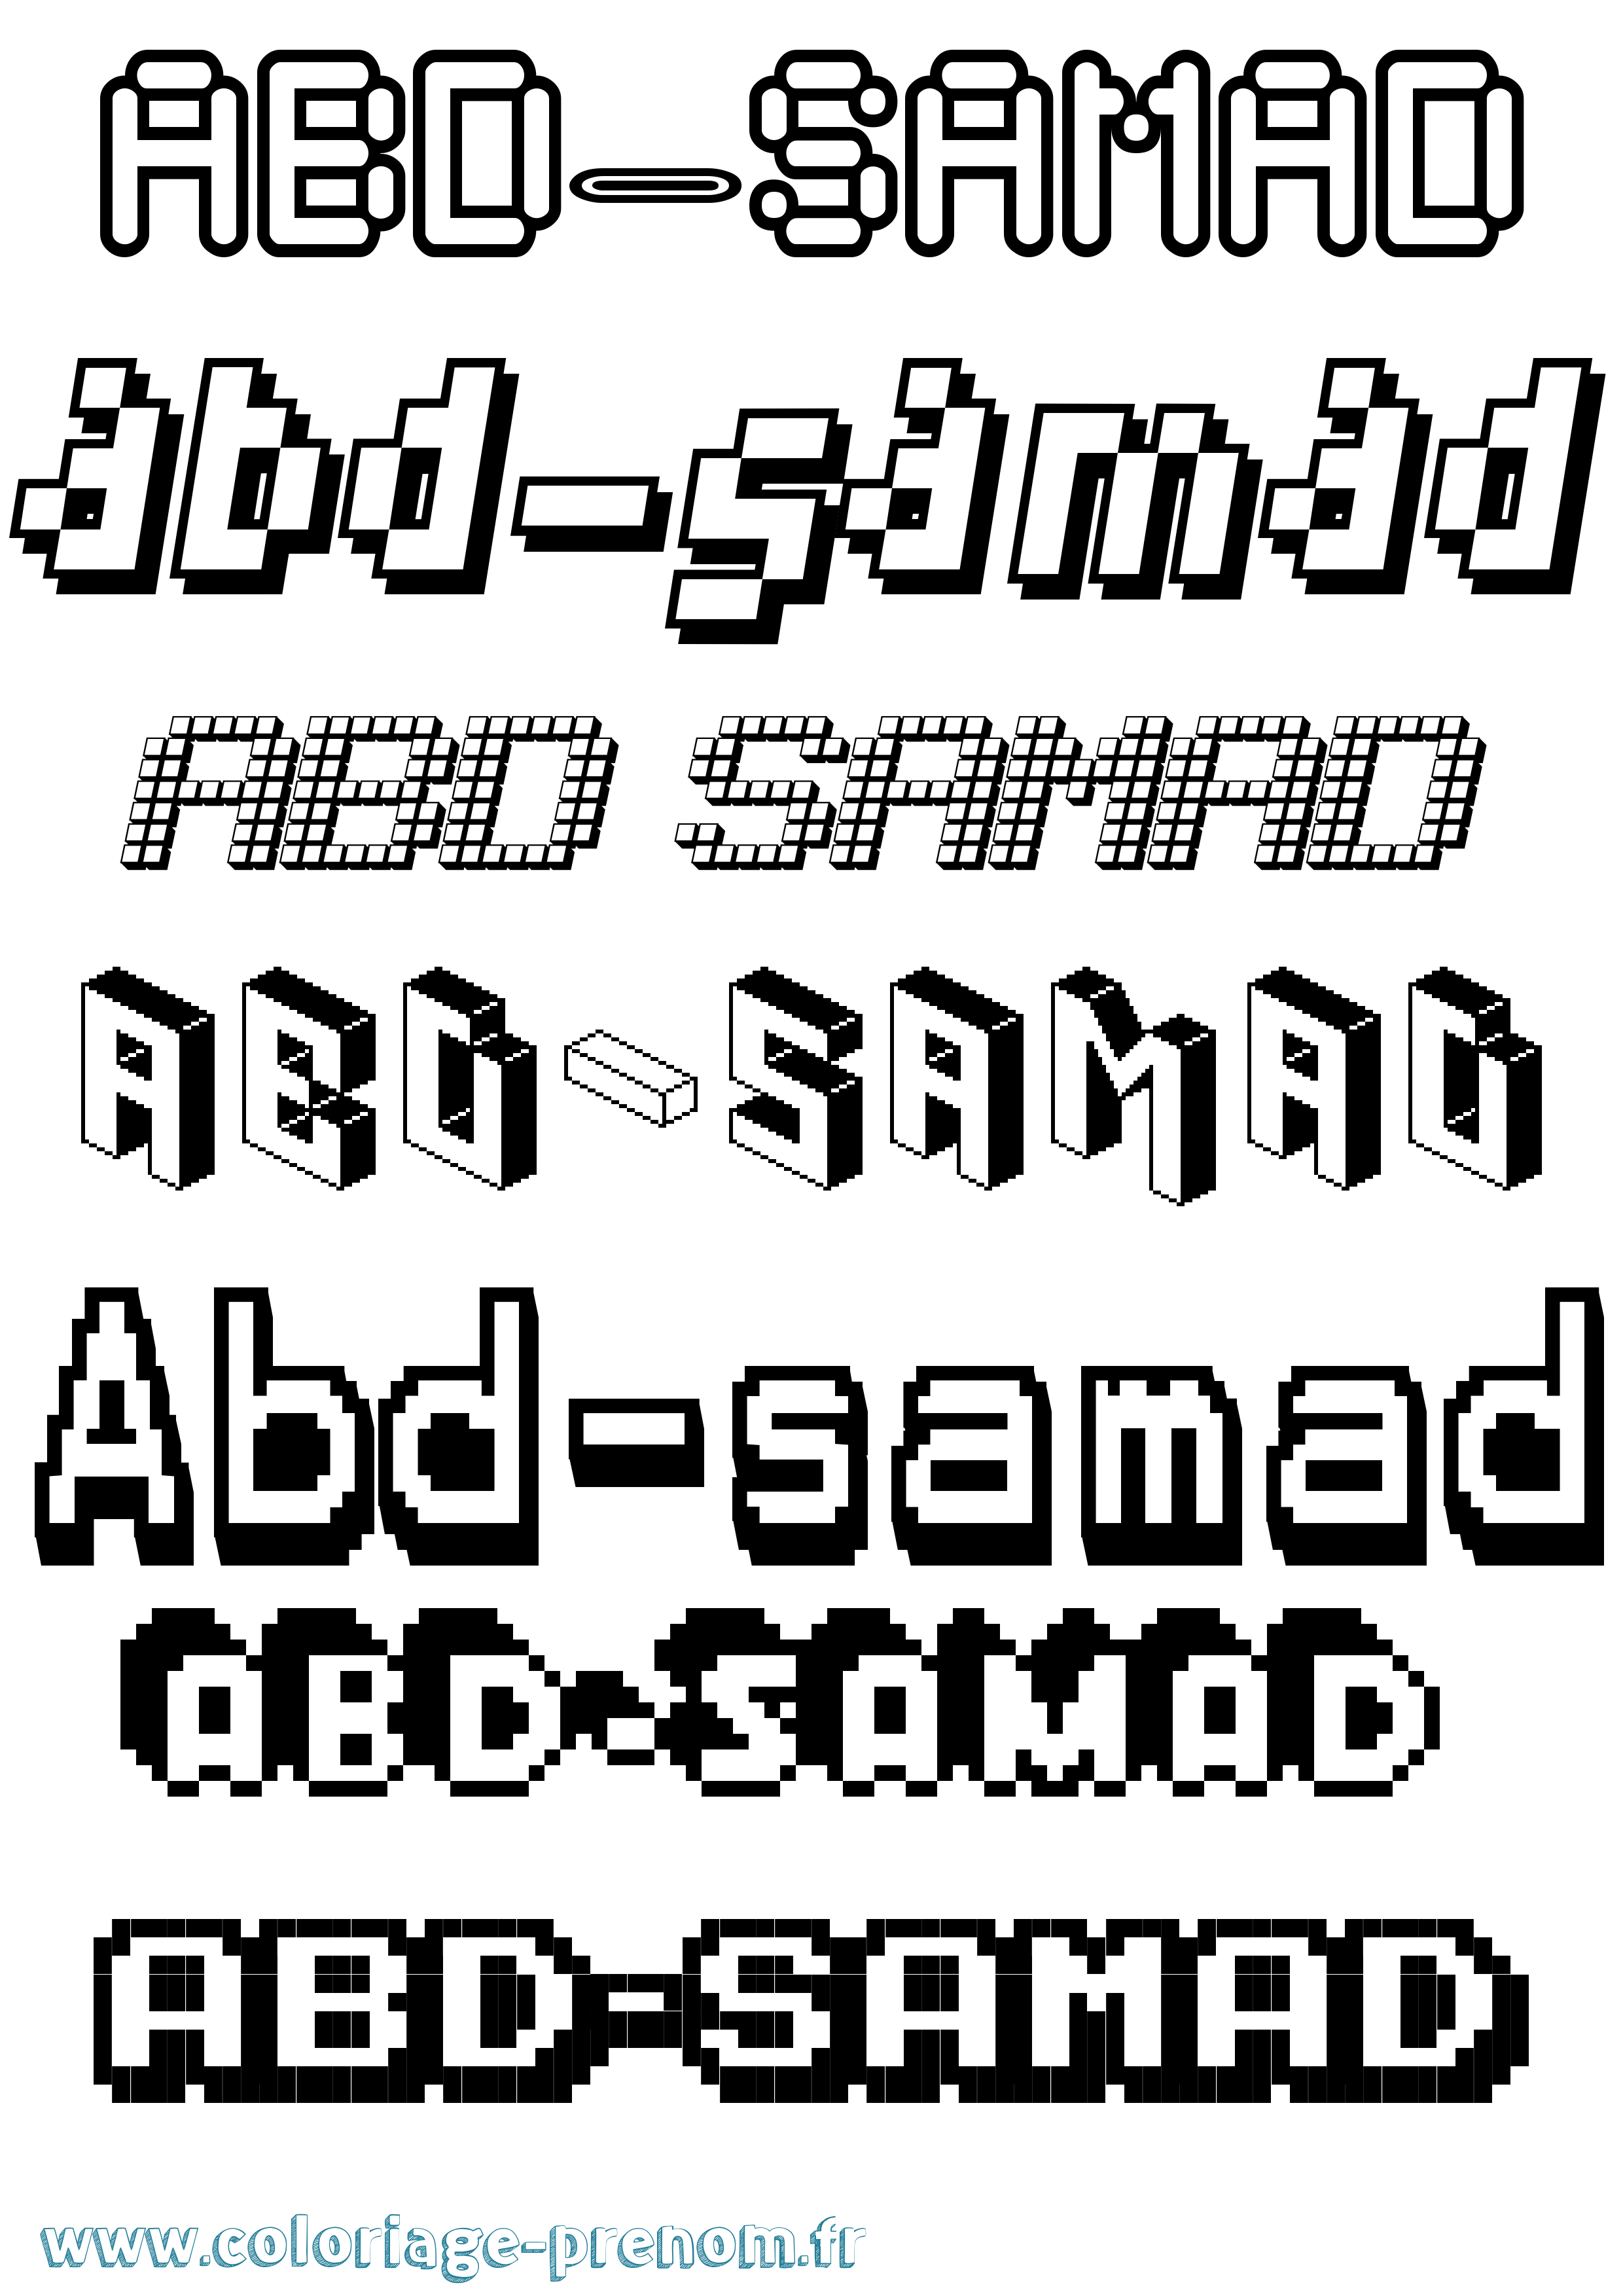 Coloriage prénom Abd-Samad Pixel